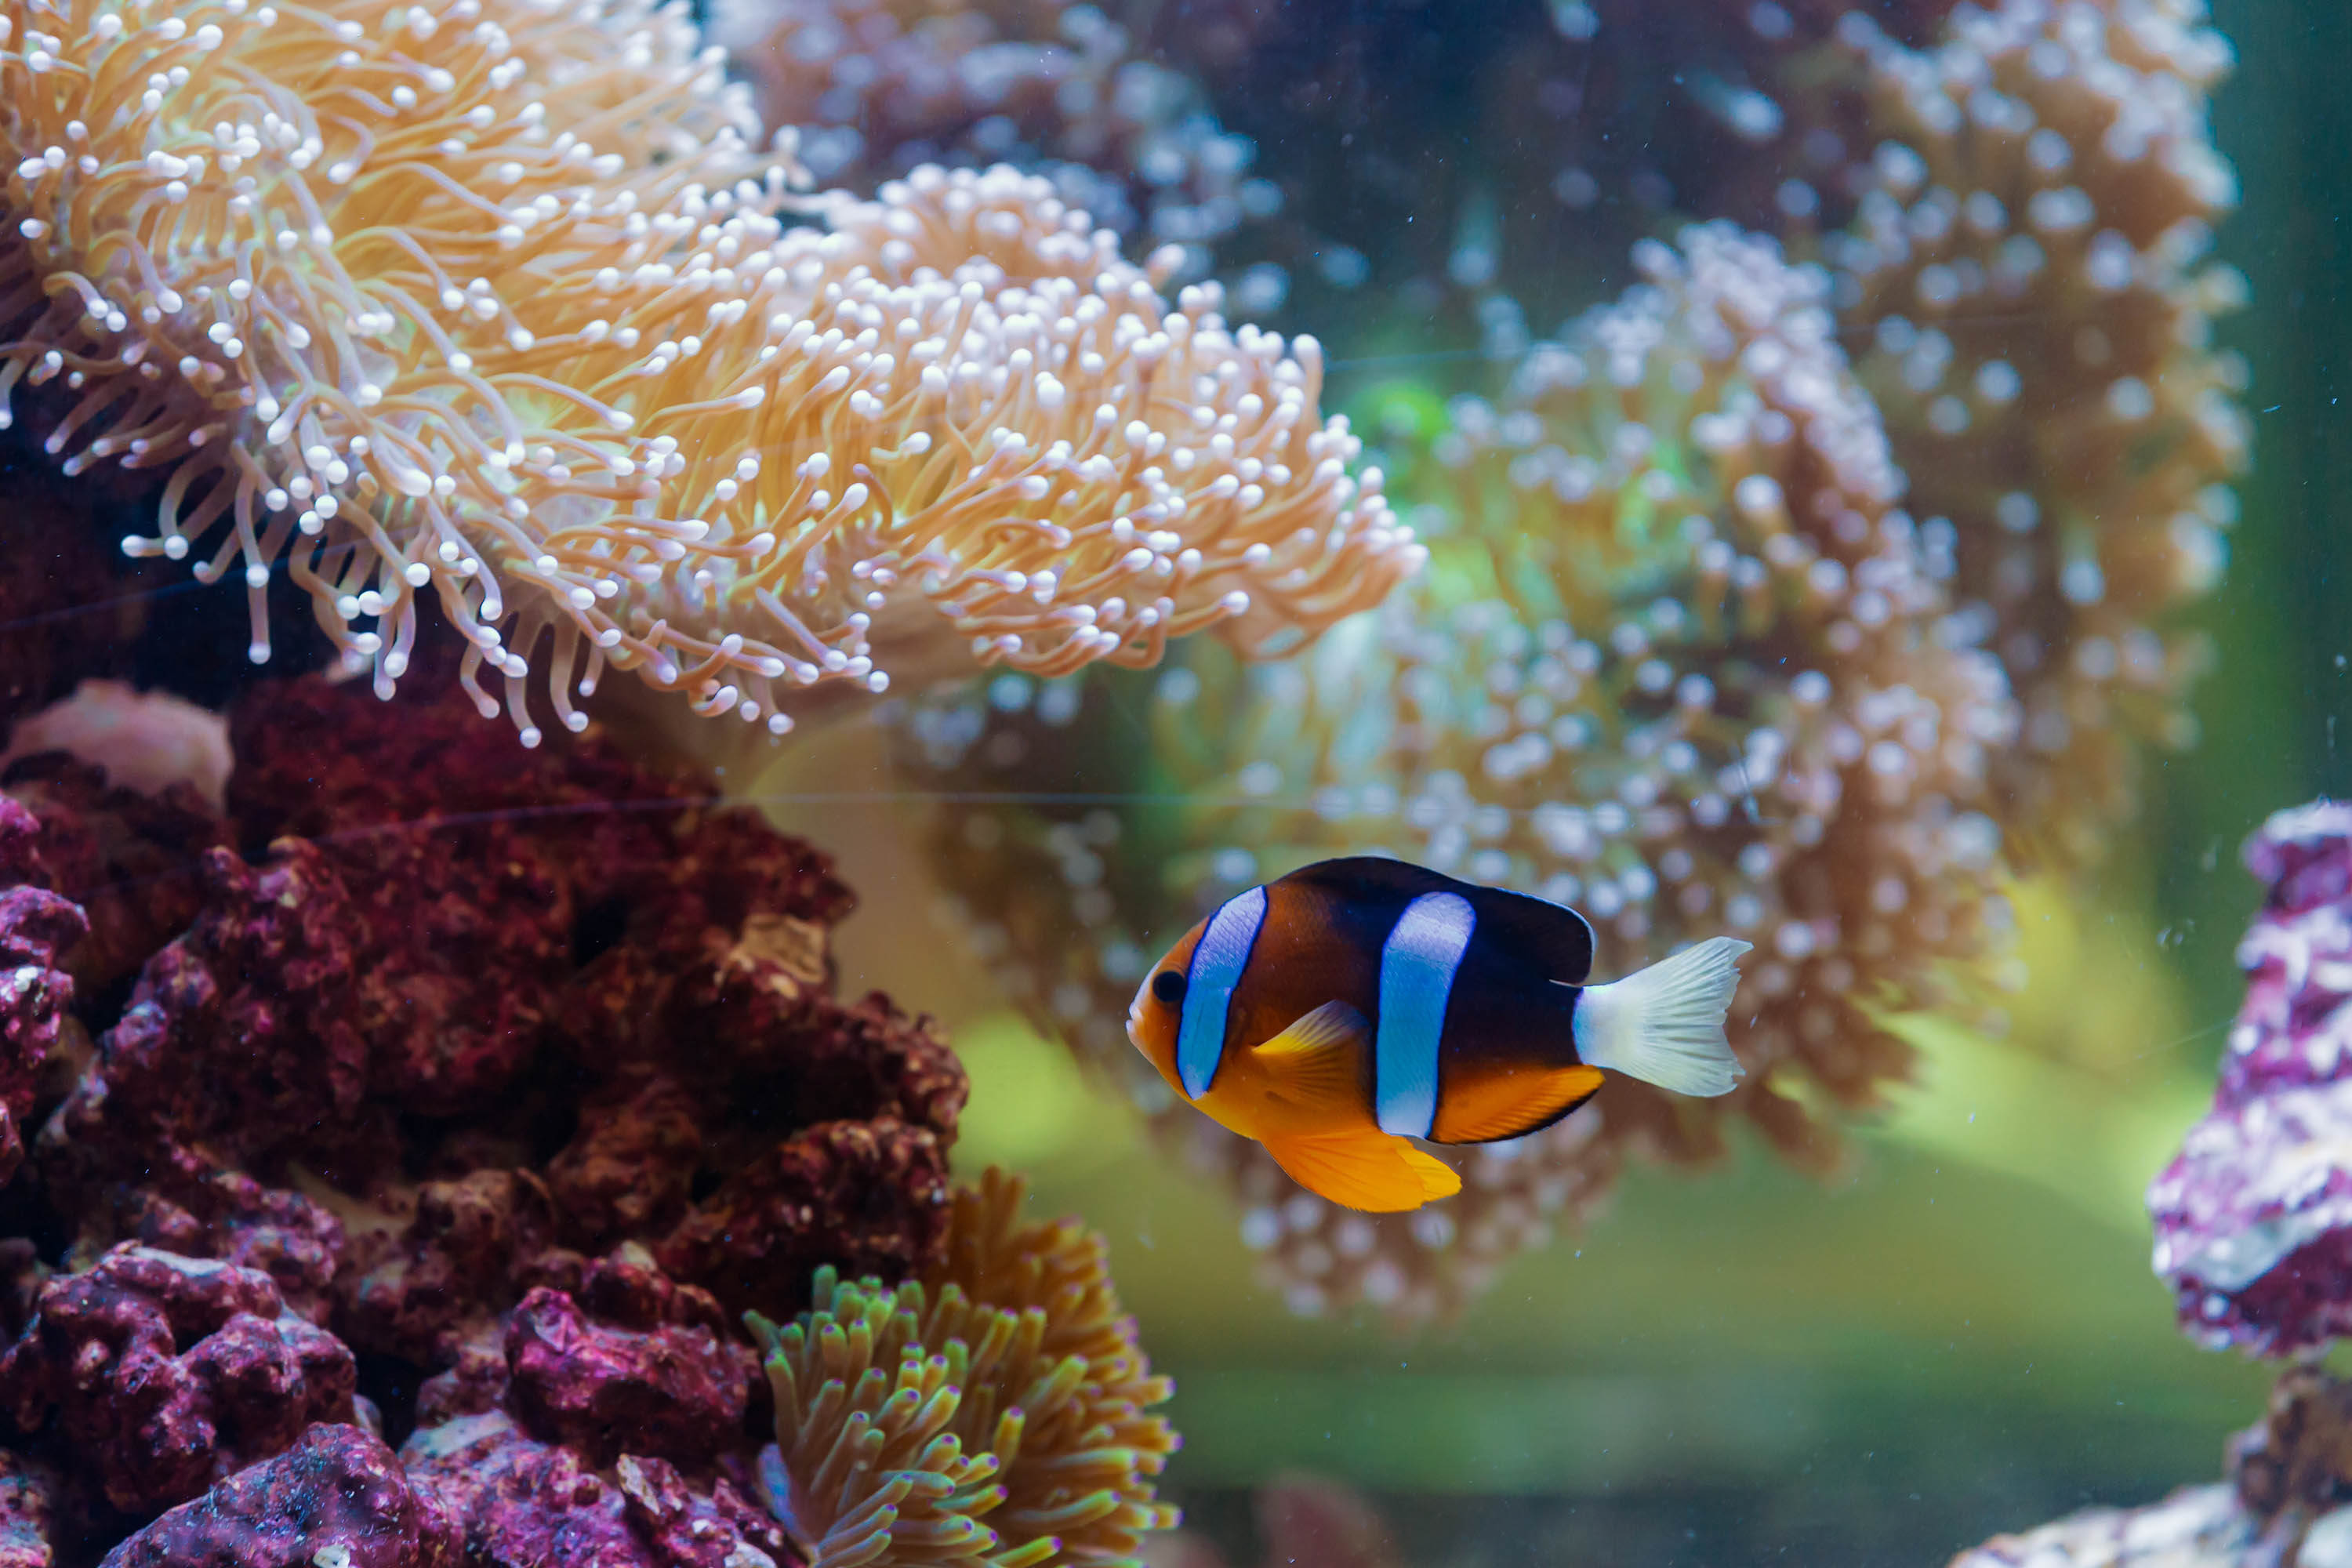 Orange, black and white clownfish swimming next to beautiful coral reefs at the National Aquarium